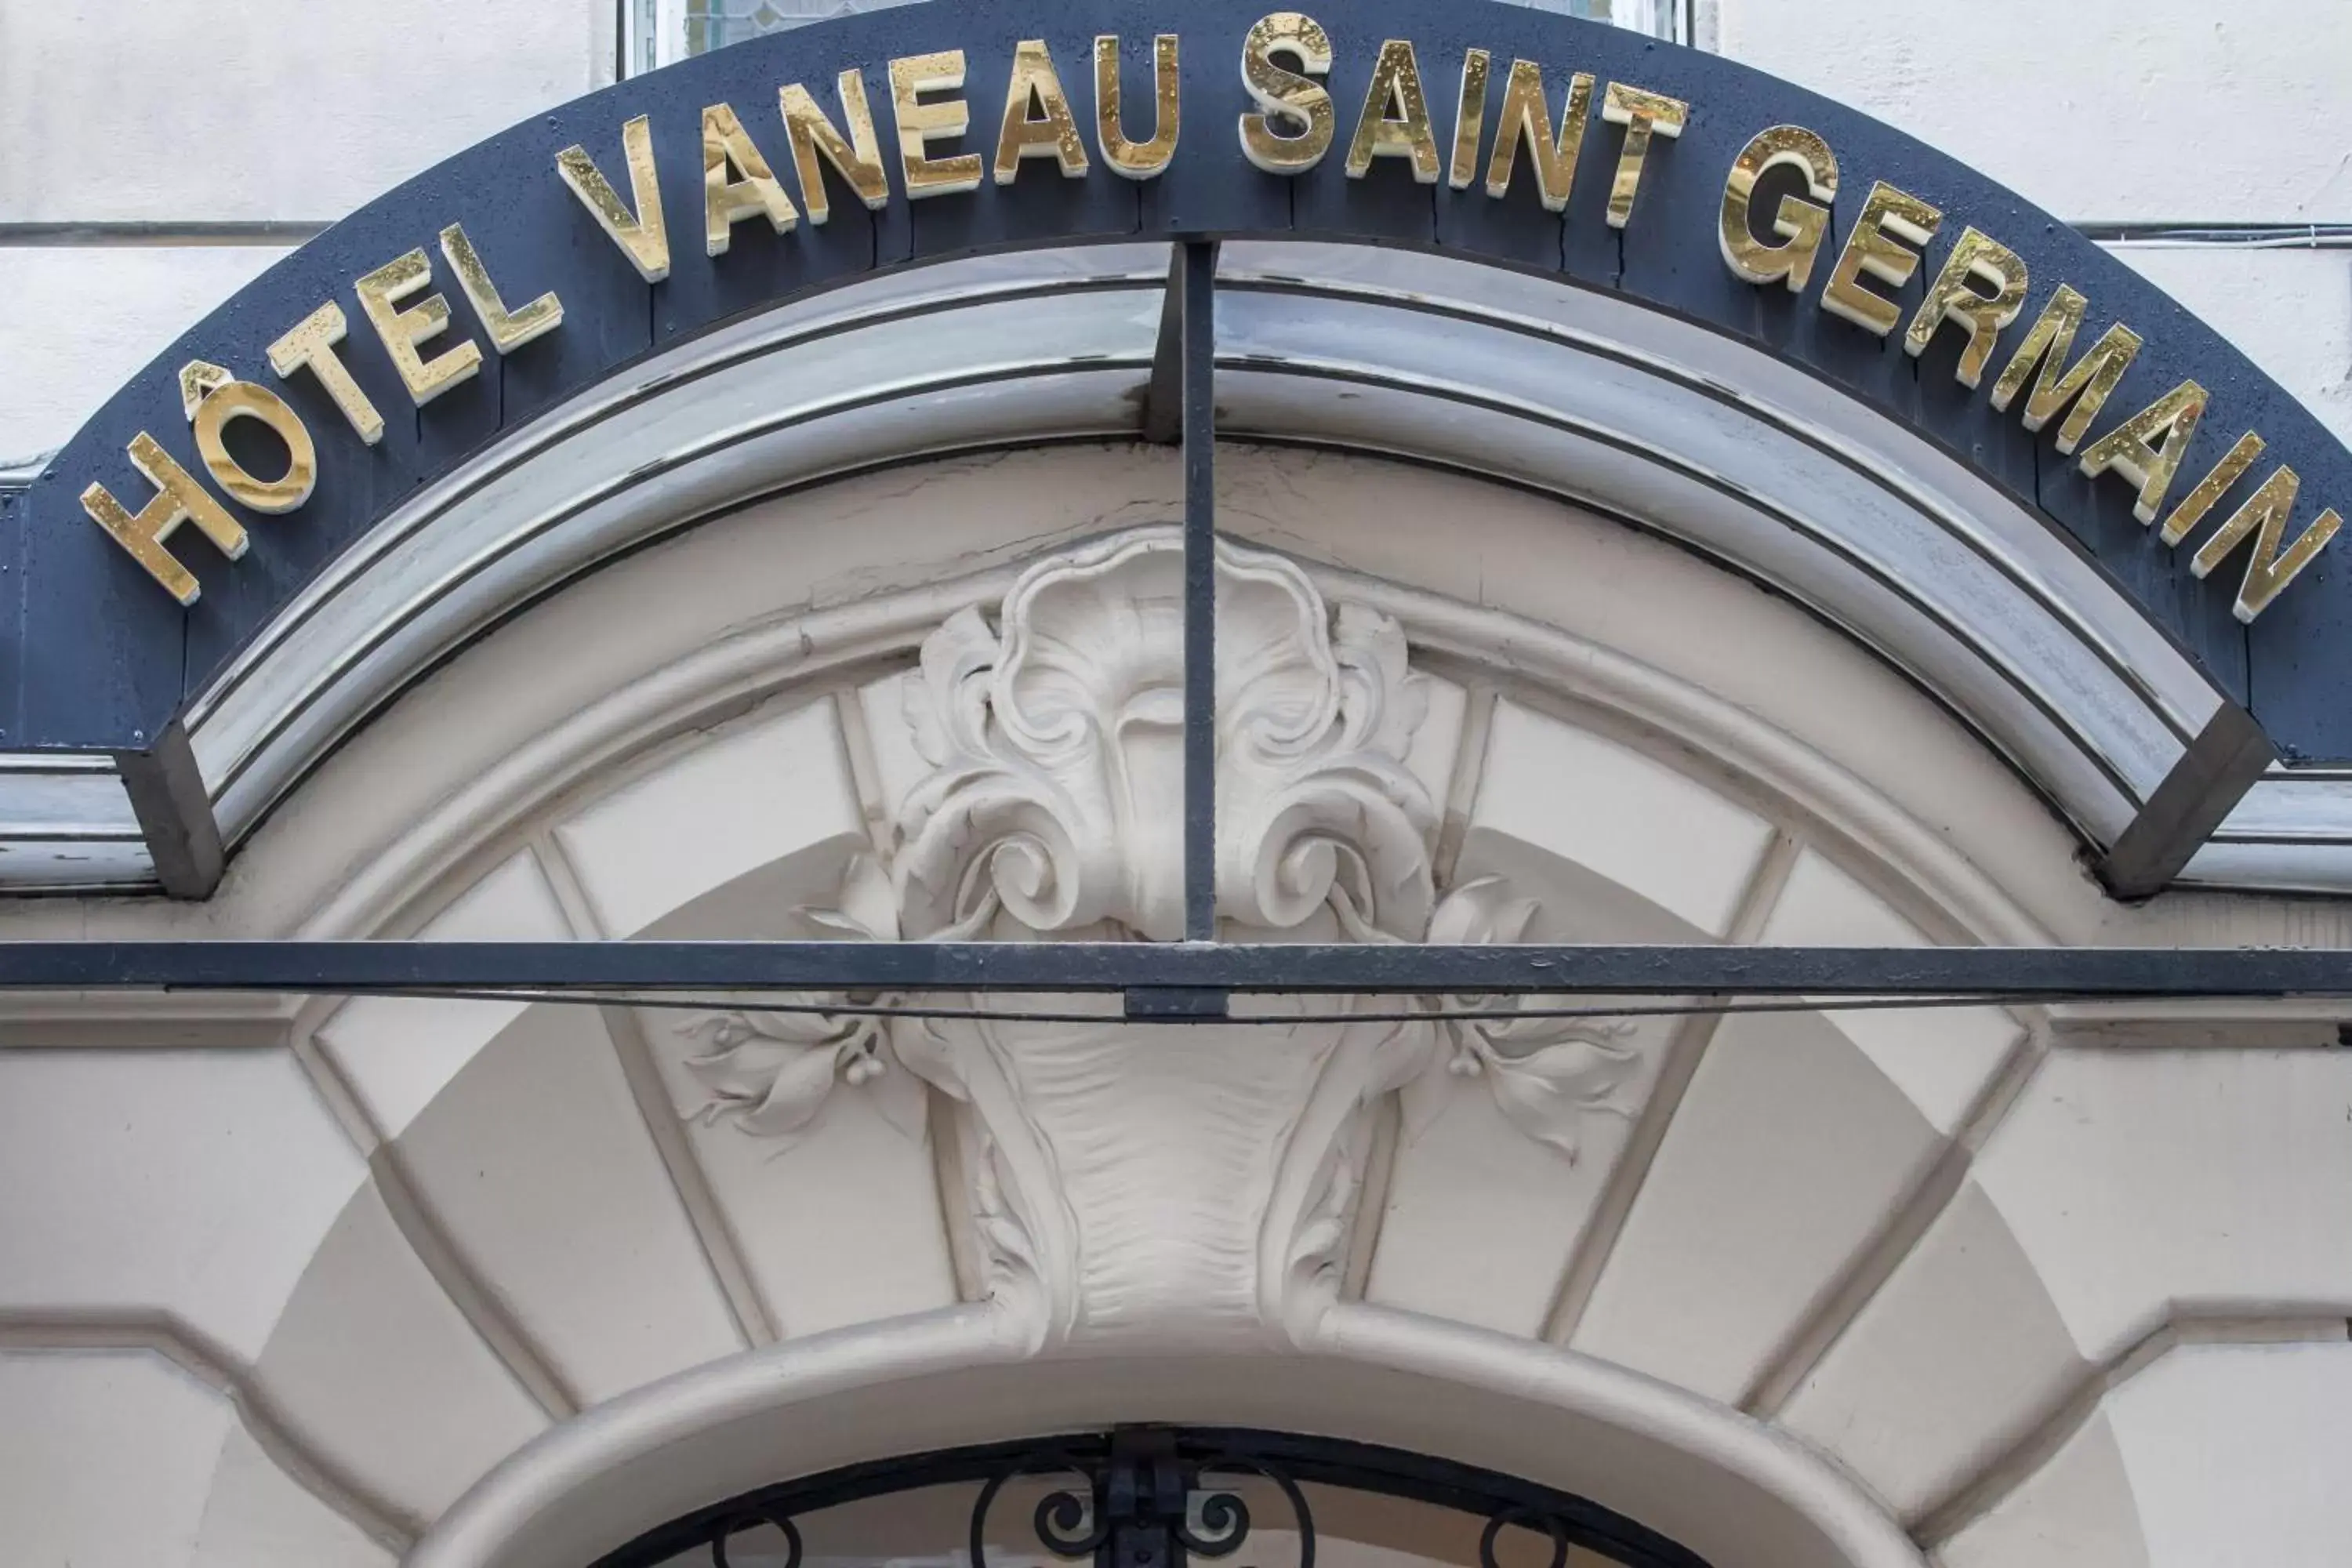 Facade/entrance in Hotel Vaneau Saint Germain